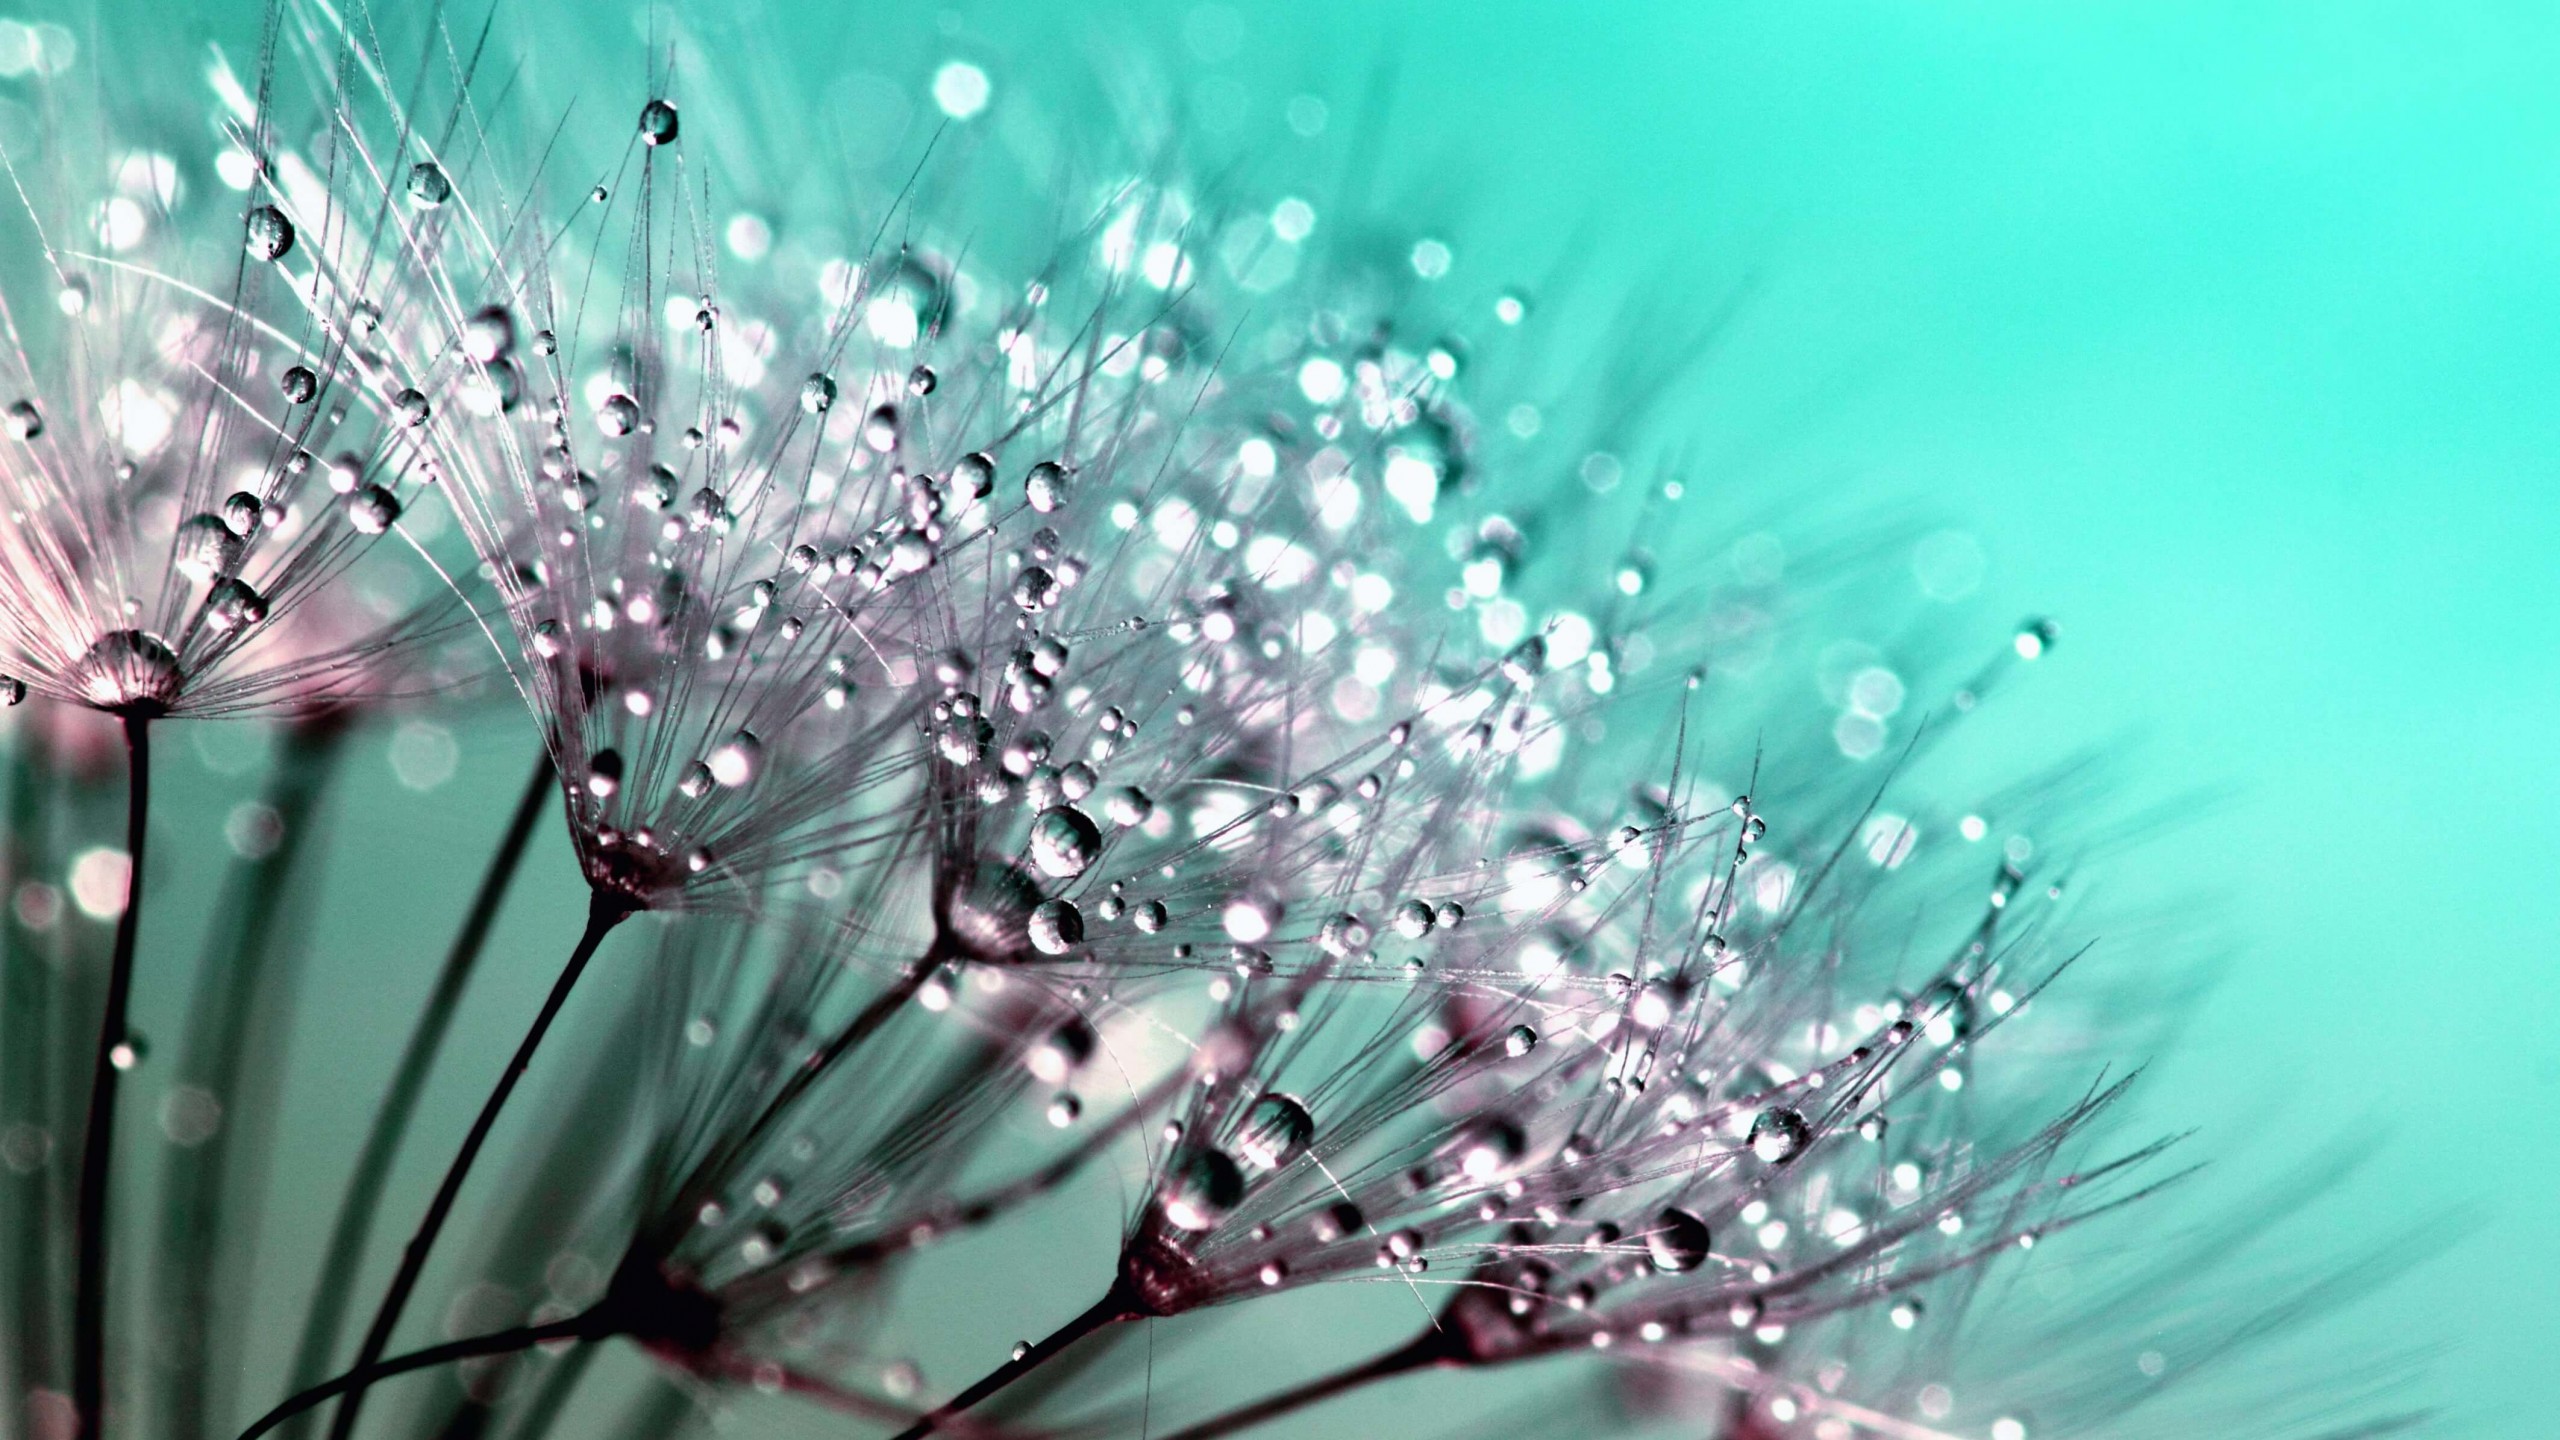 Dew Drops on Dandelion Seeds Wallpaper for Desktop 2560x1440